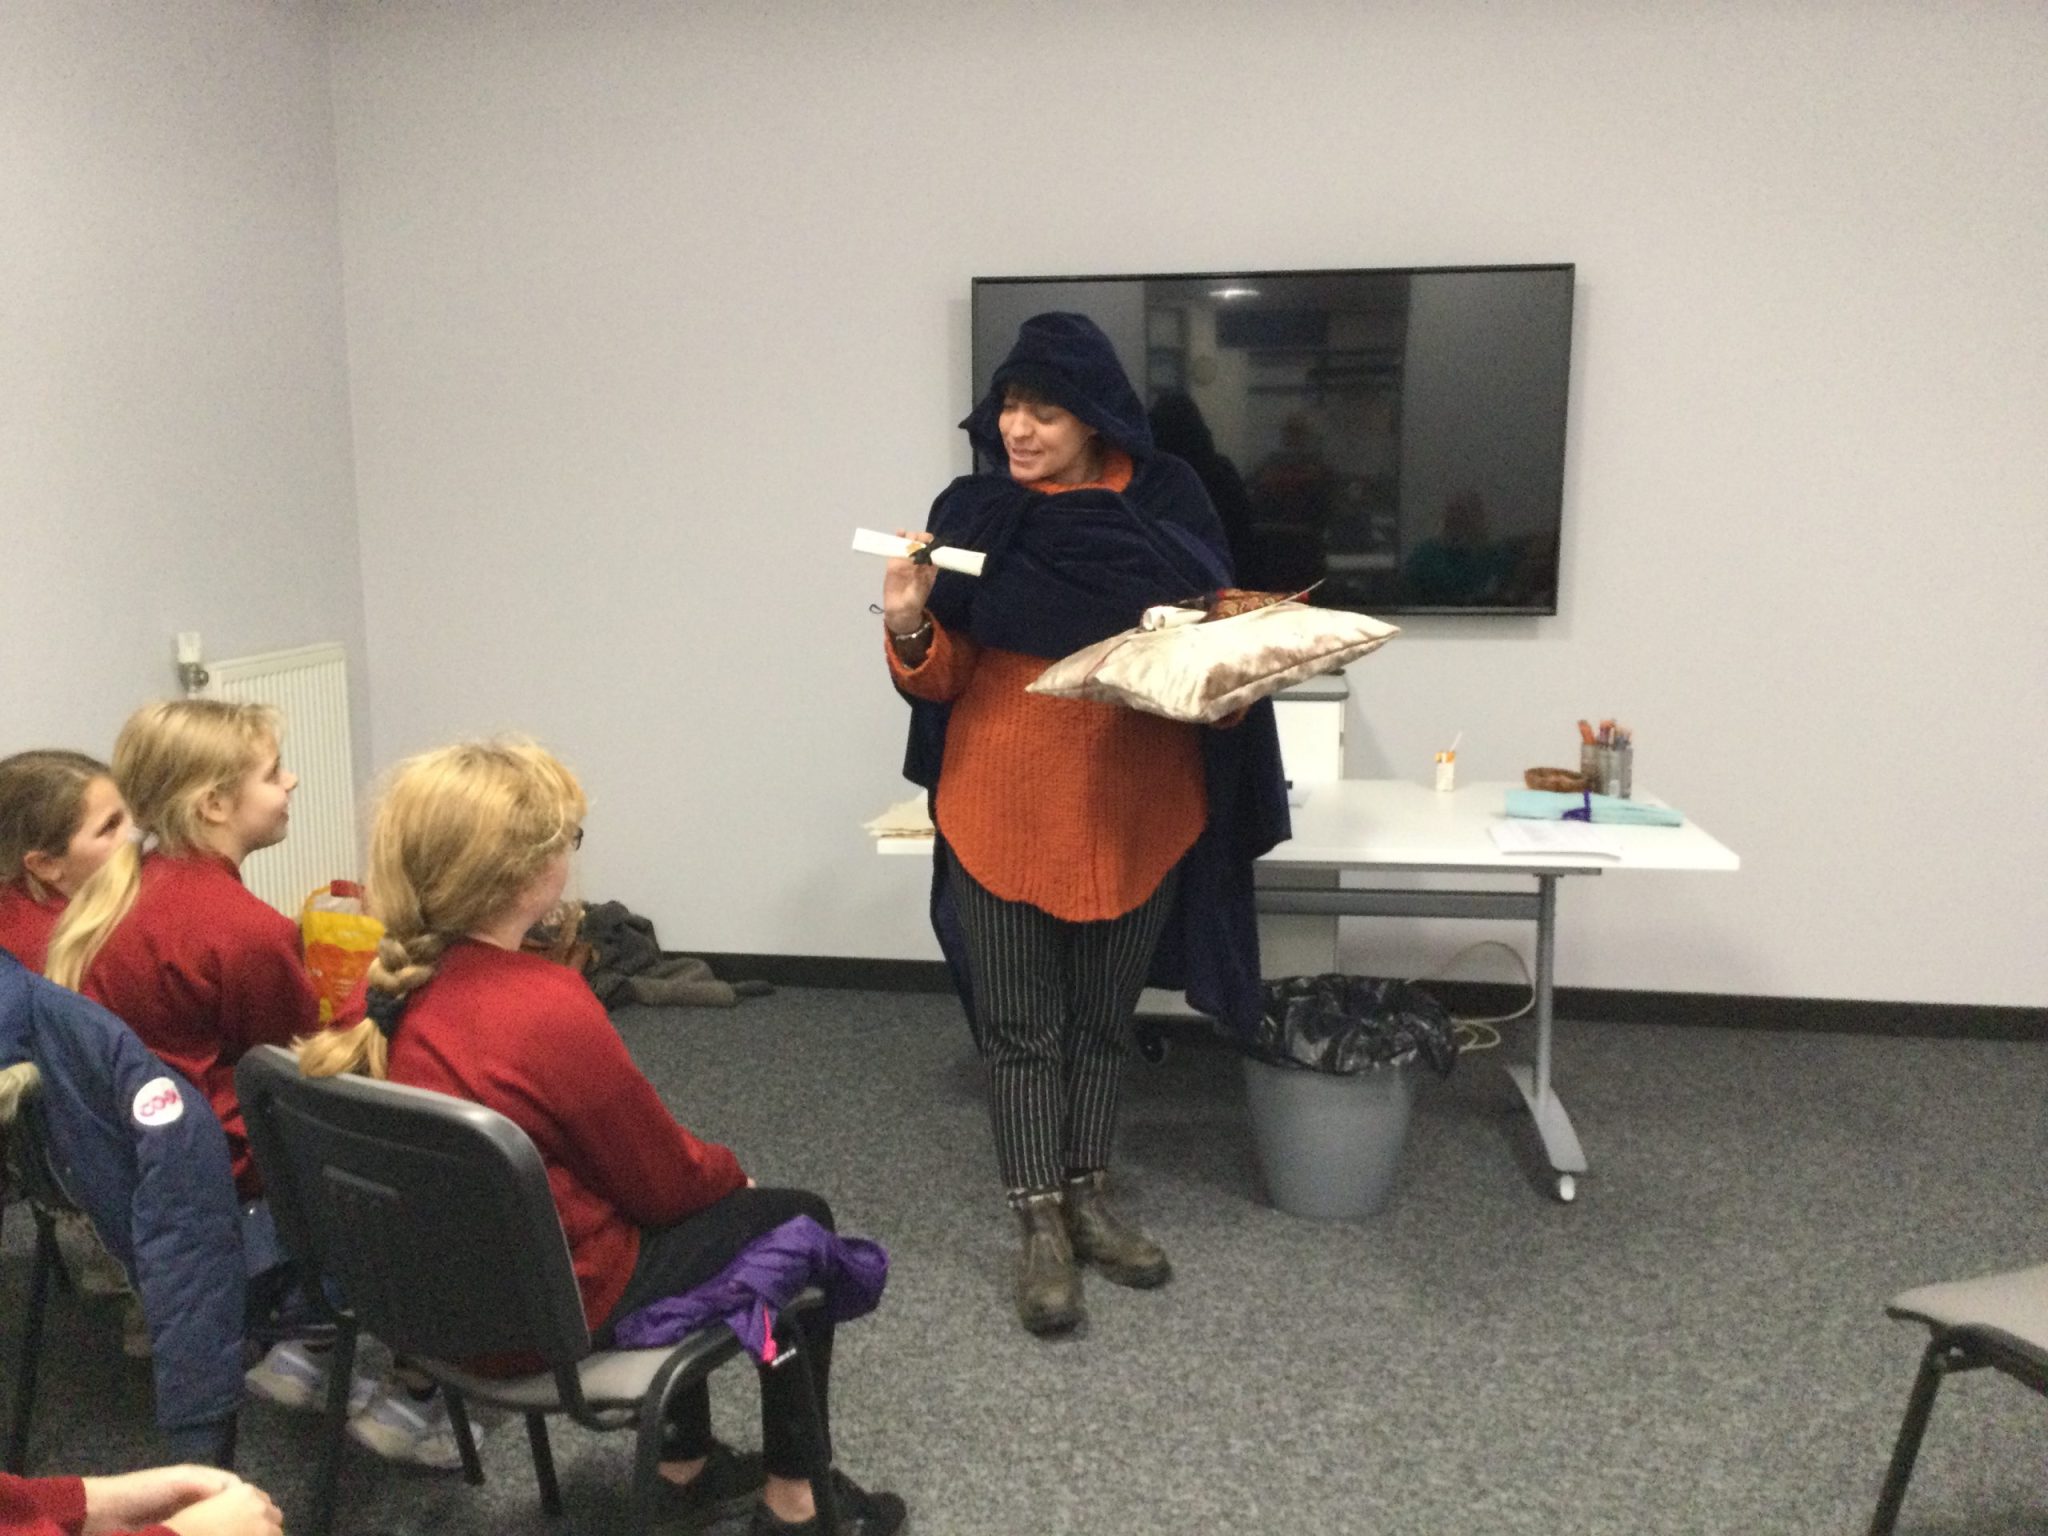 Artist Caitlin dressed in a blue velvet cloak handing out scrolls to the children